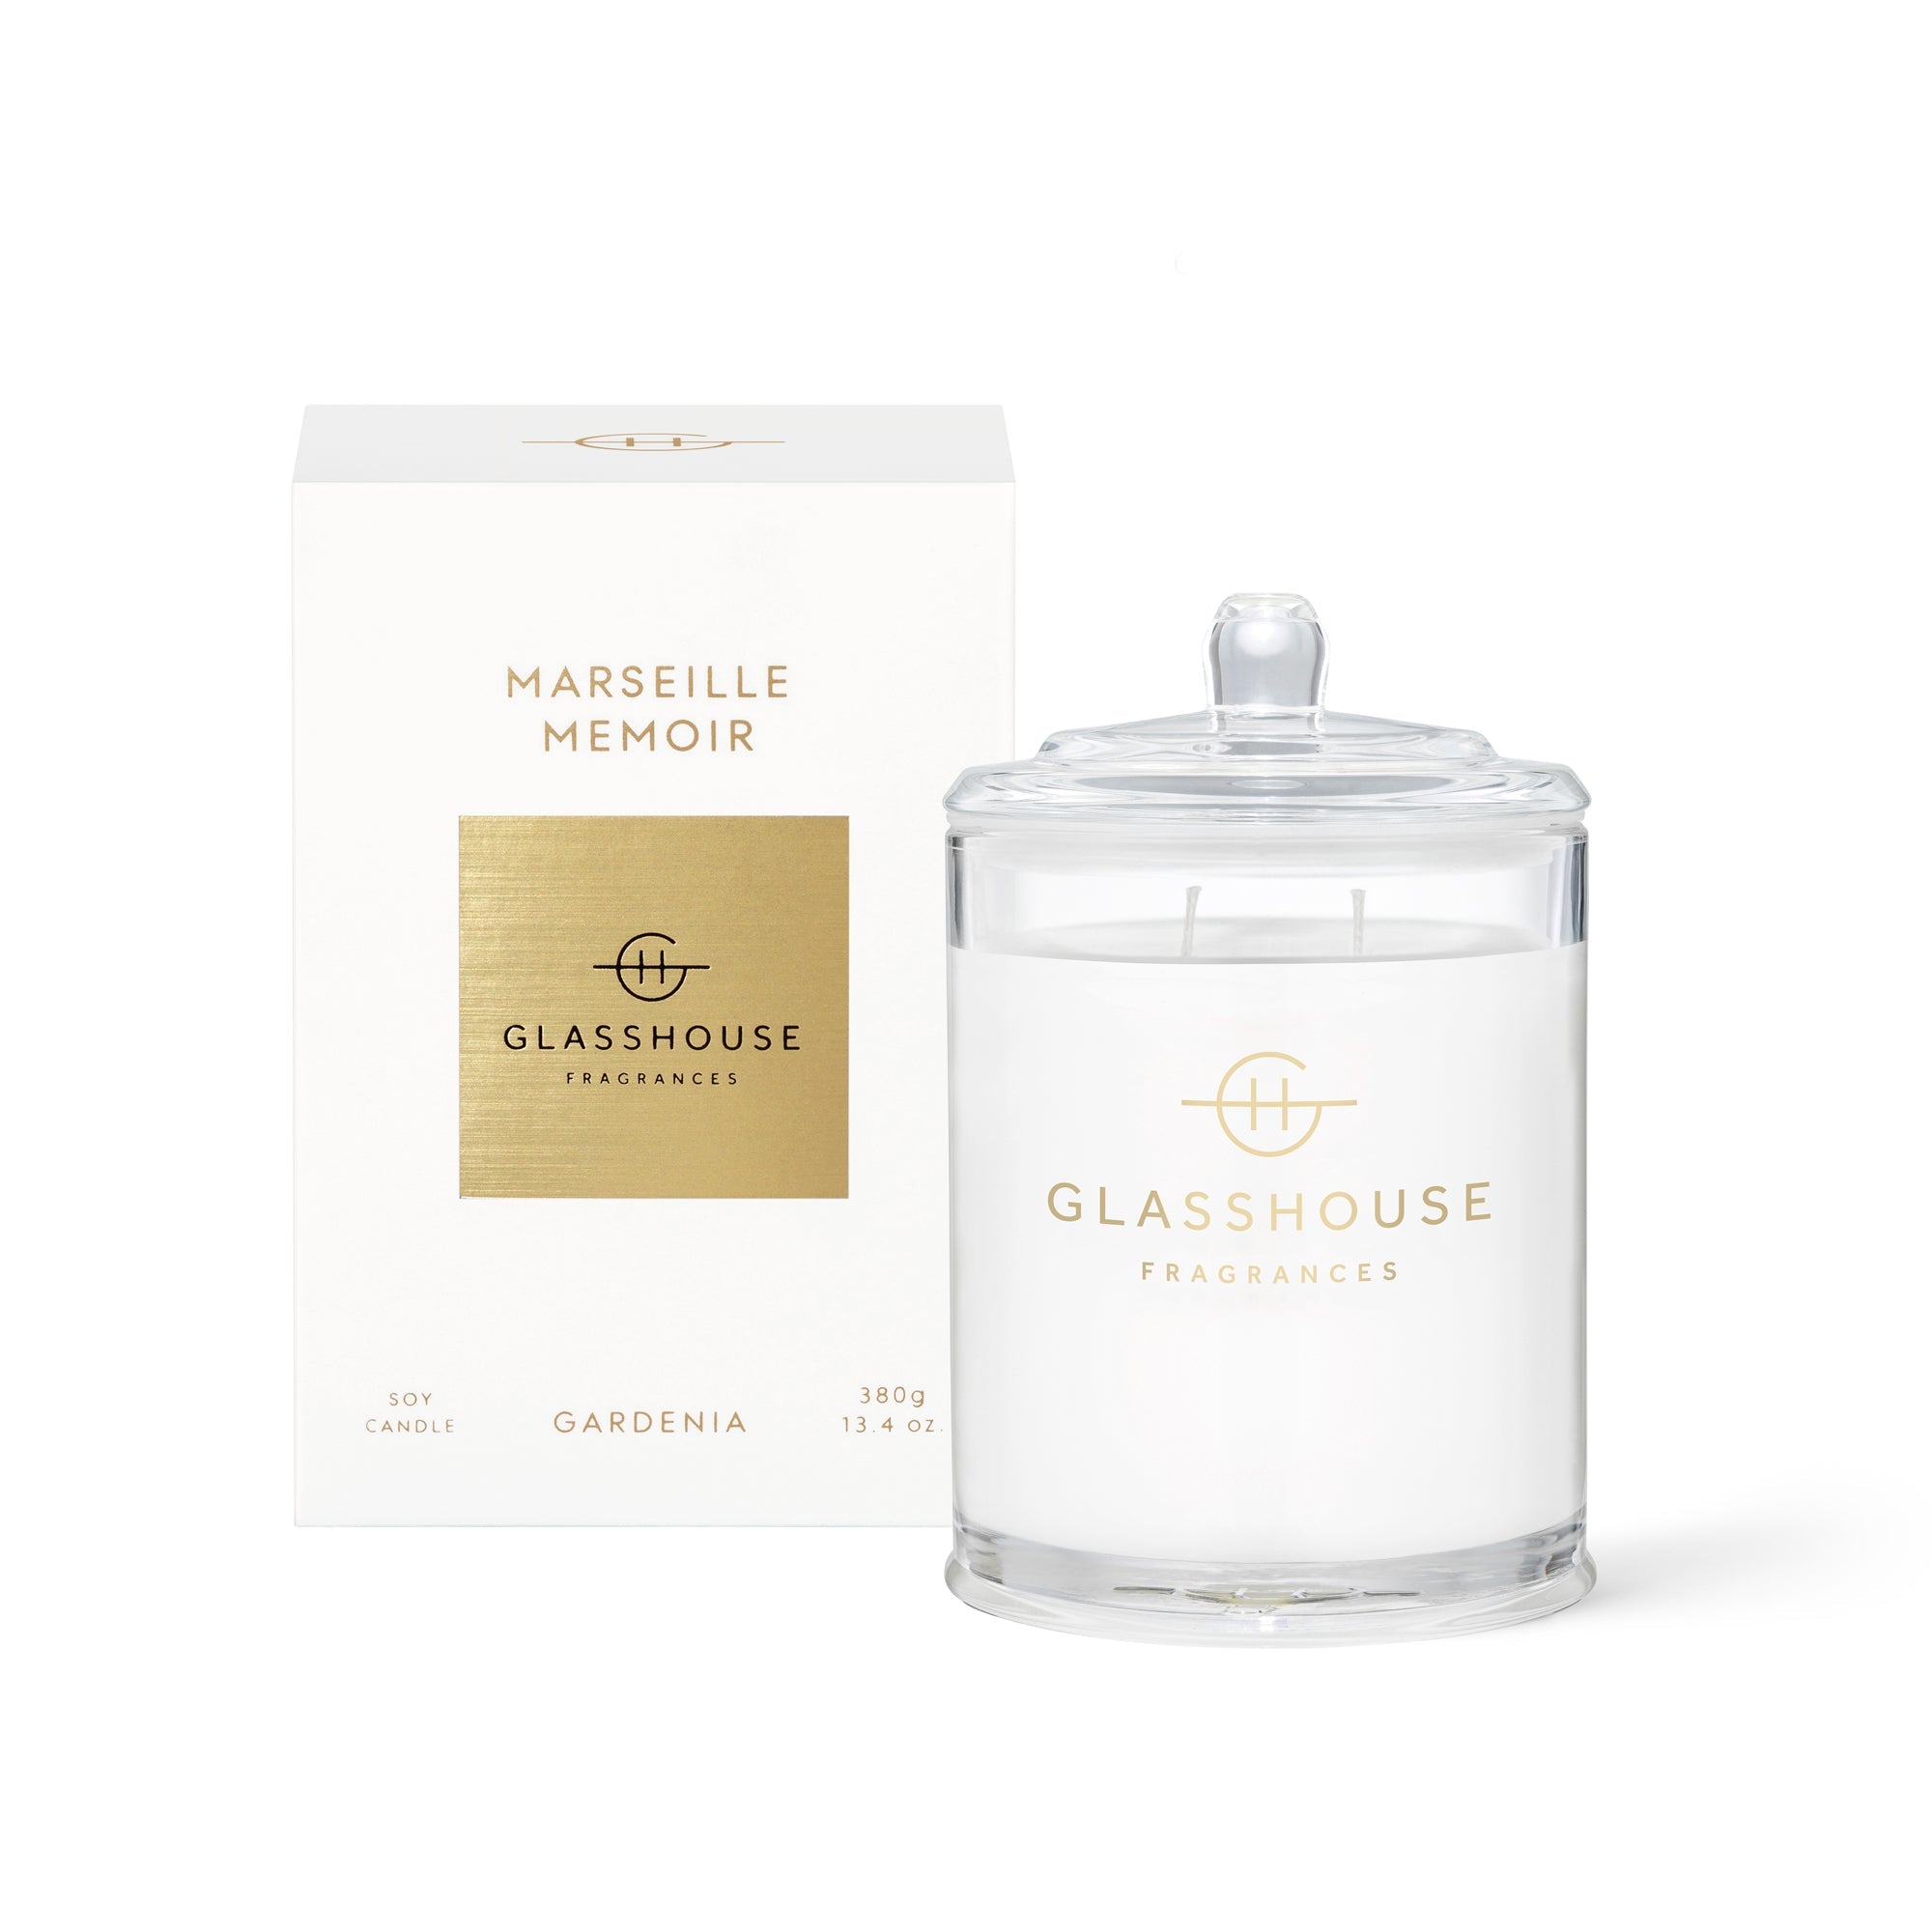 Glasshouse Marseille Memoir Candle 380g - Exquisite Laser Clinic